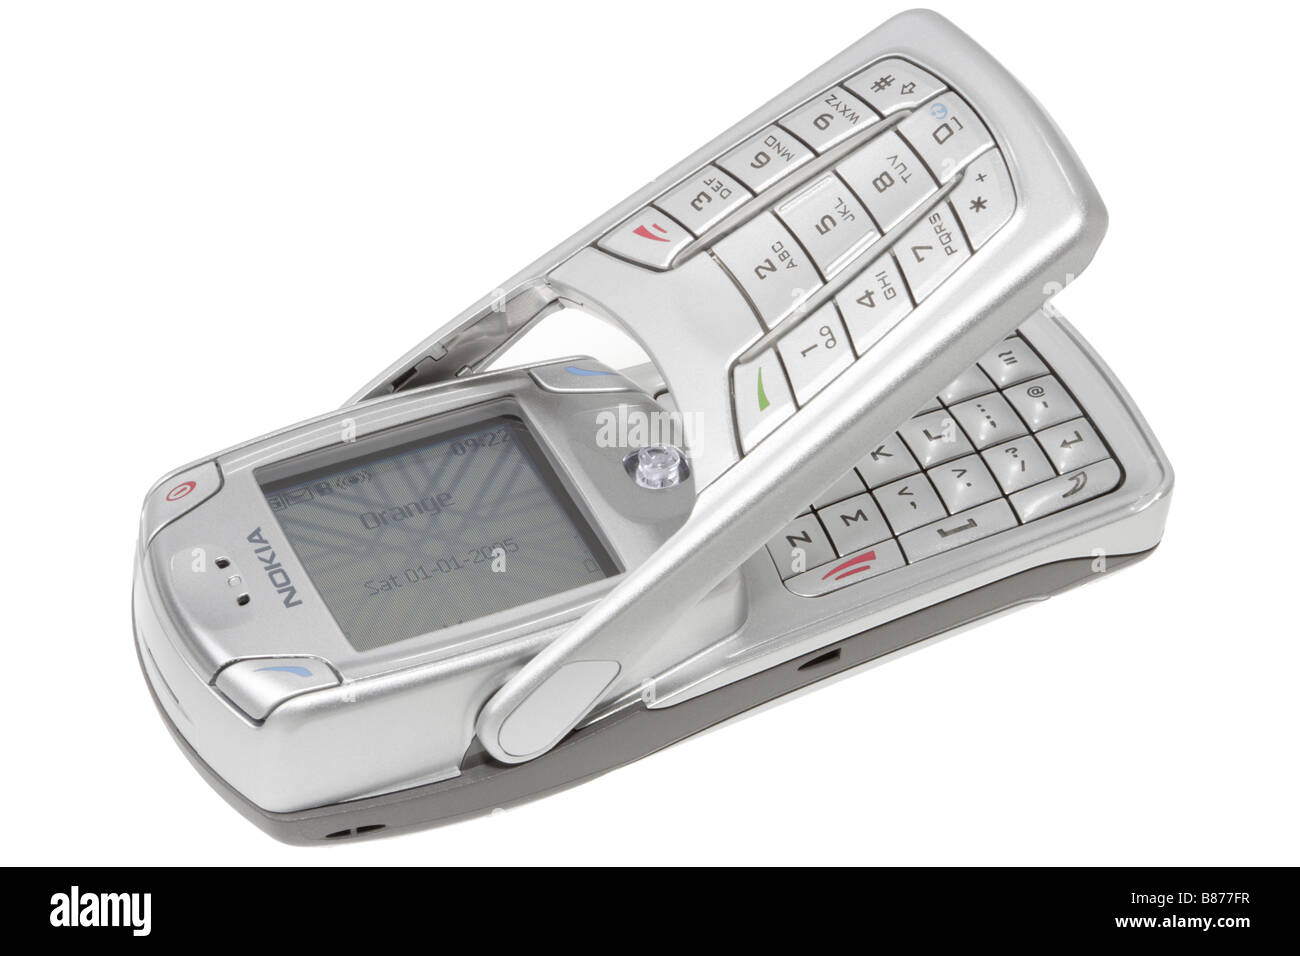 Nokia Mobiltelefon Handy und Tastatur Stockfotografie - Alamy